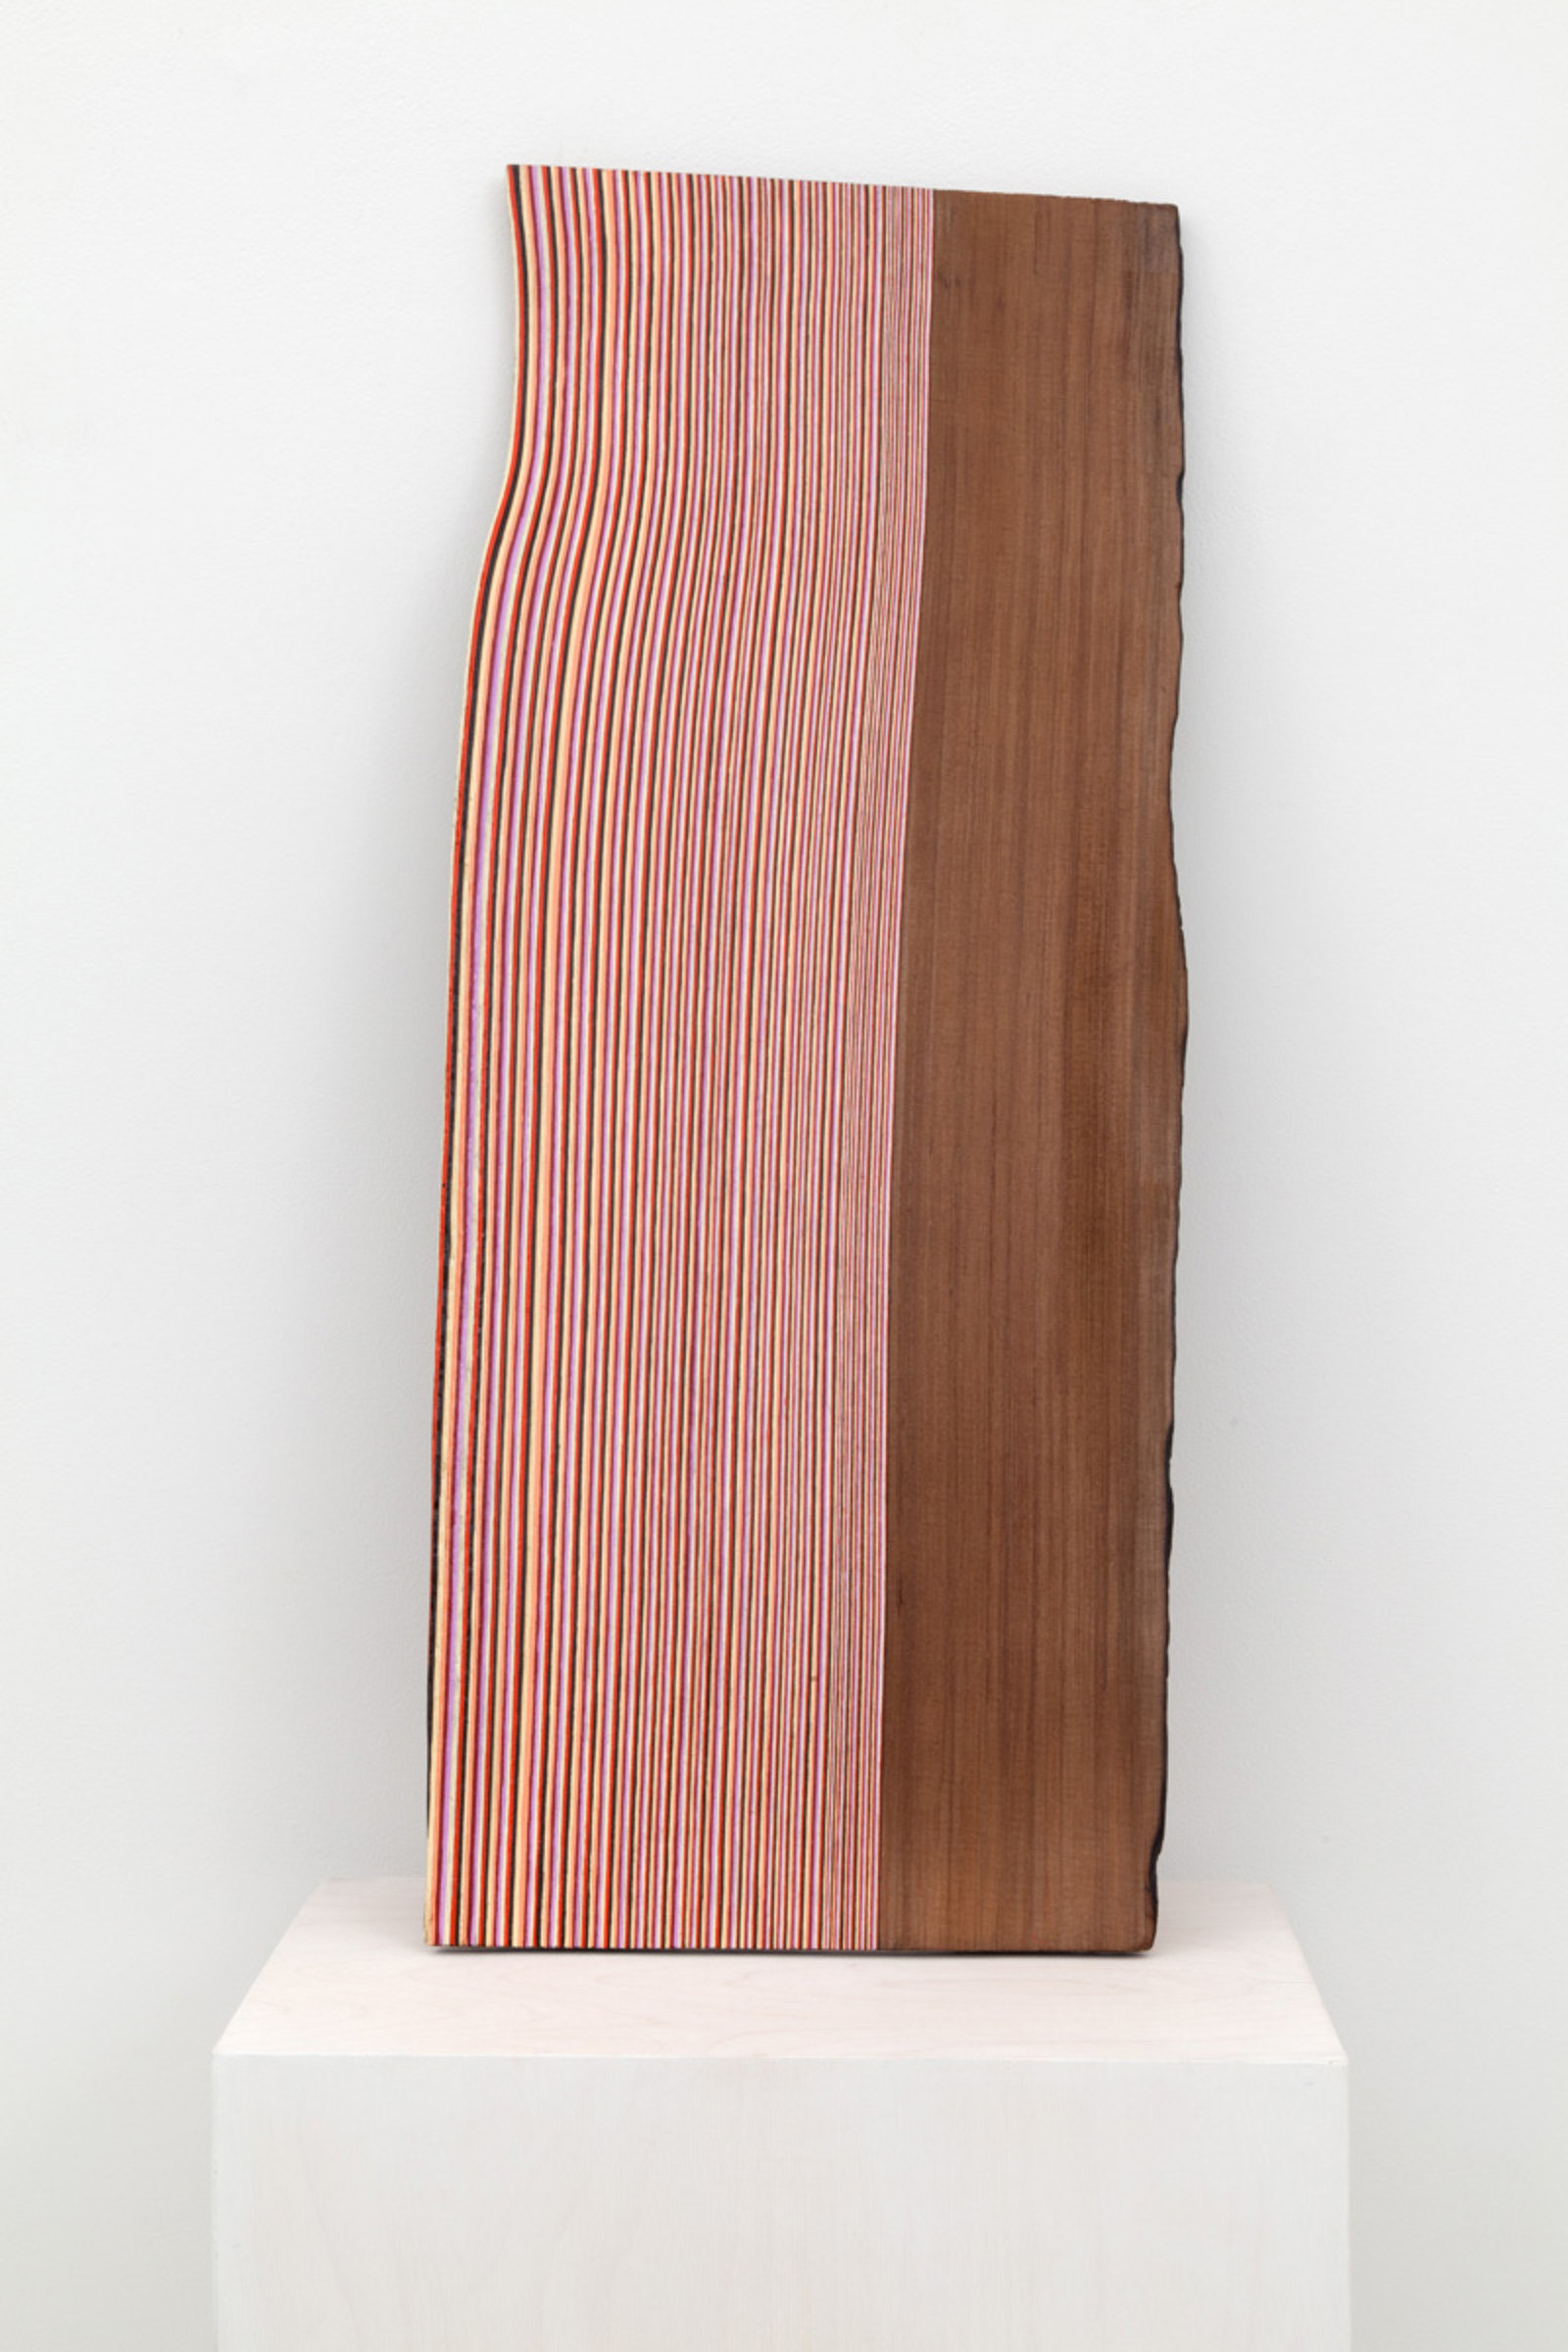 Brian Jungen, Shake, 2014, cedar, alkyd-resin enamel, 28 x 12 x 1 in. (70 x 29 x 2 cm)